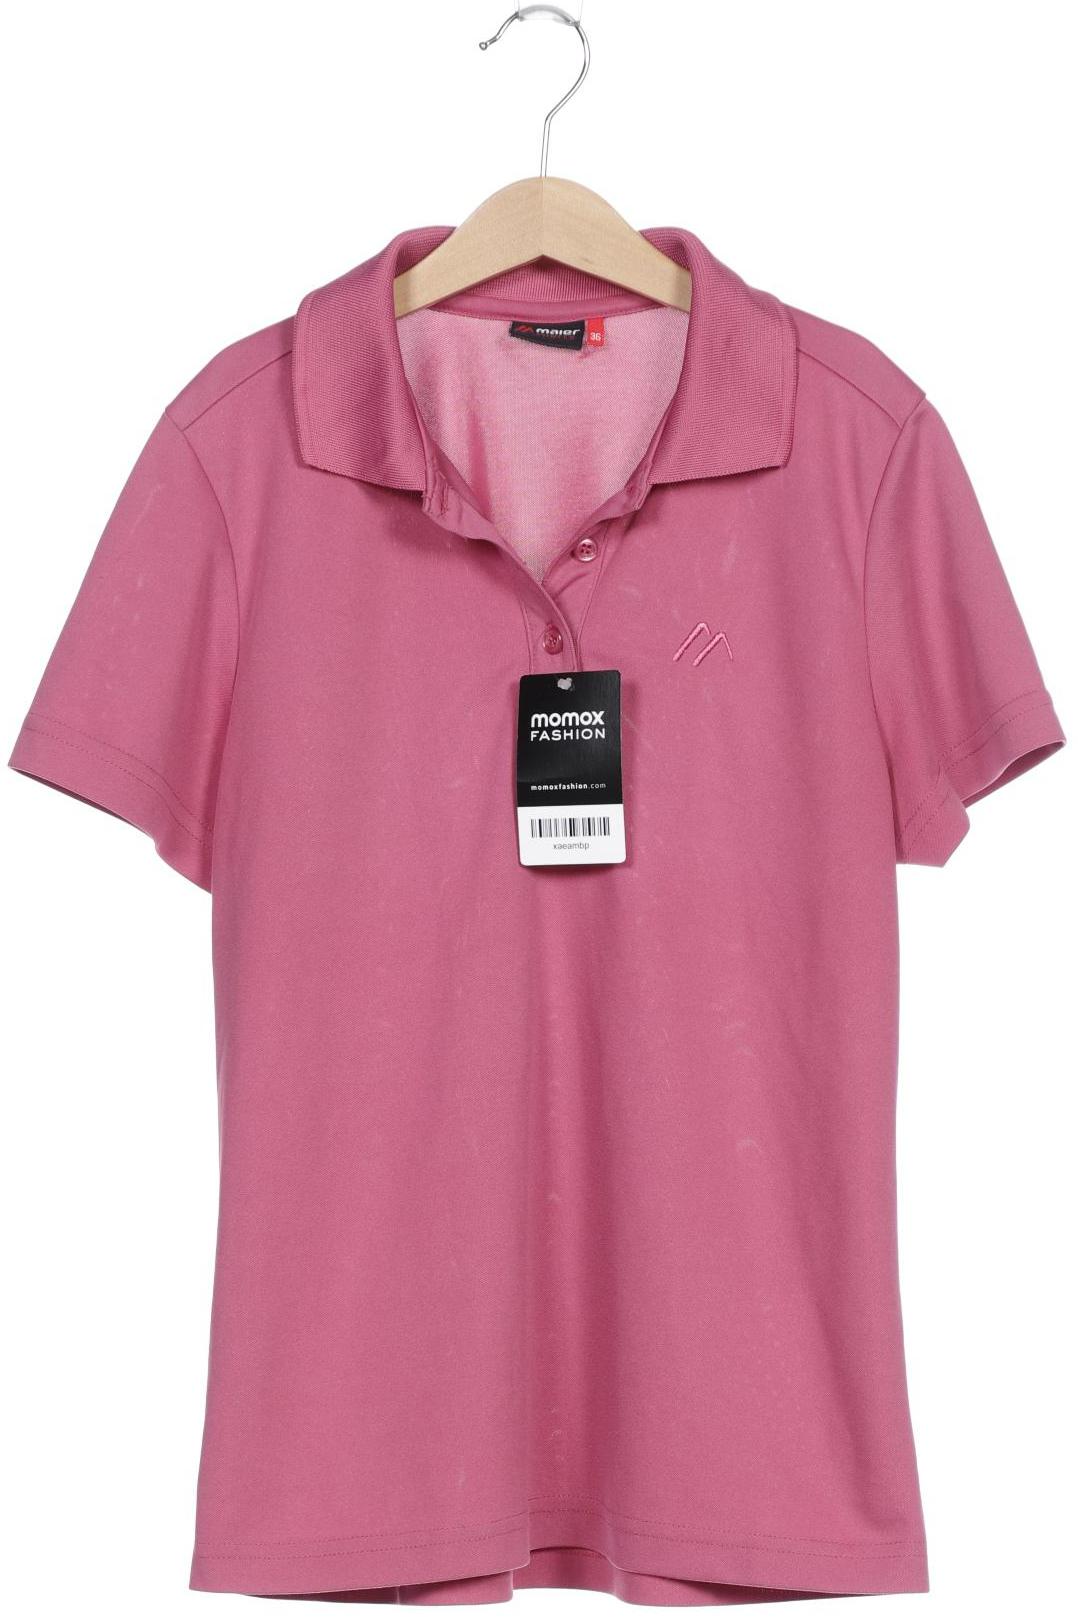 Maier Sports Damen Poloshirt, pink von maier sports